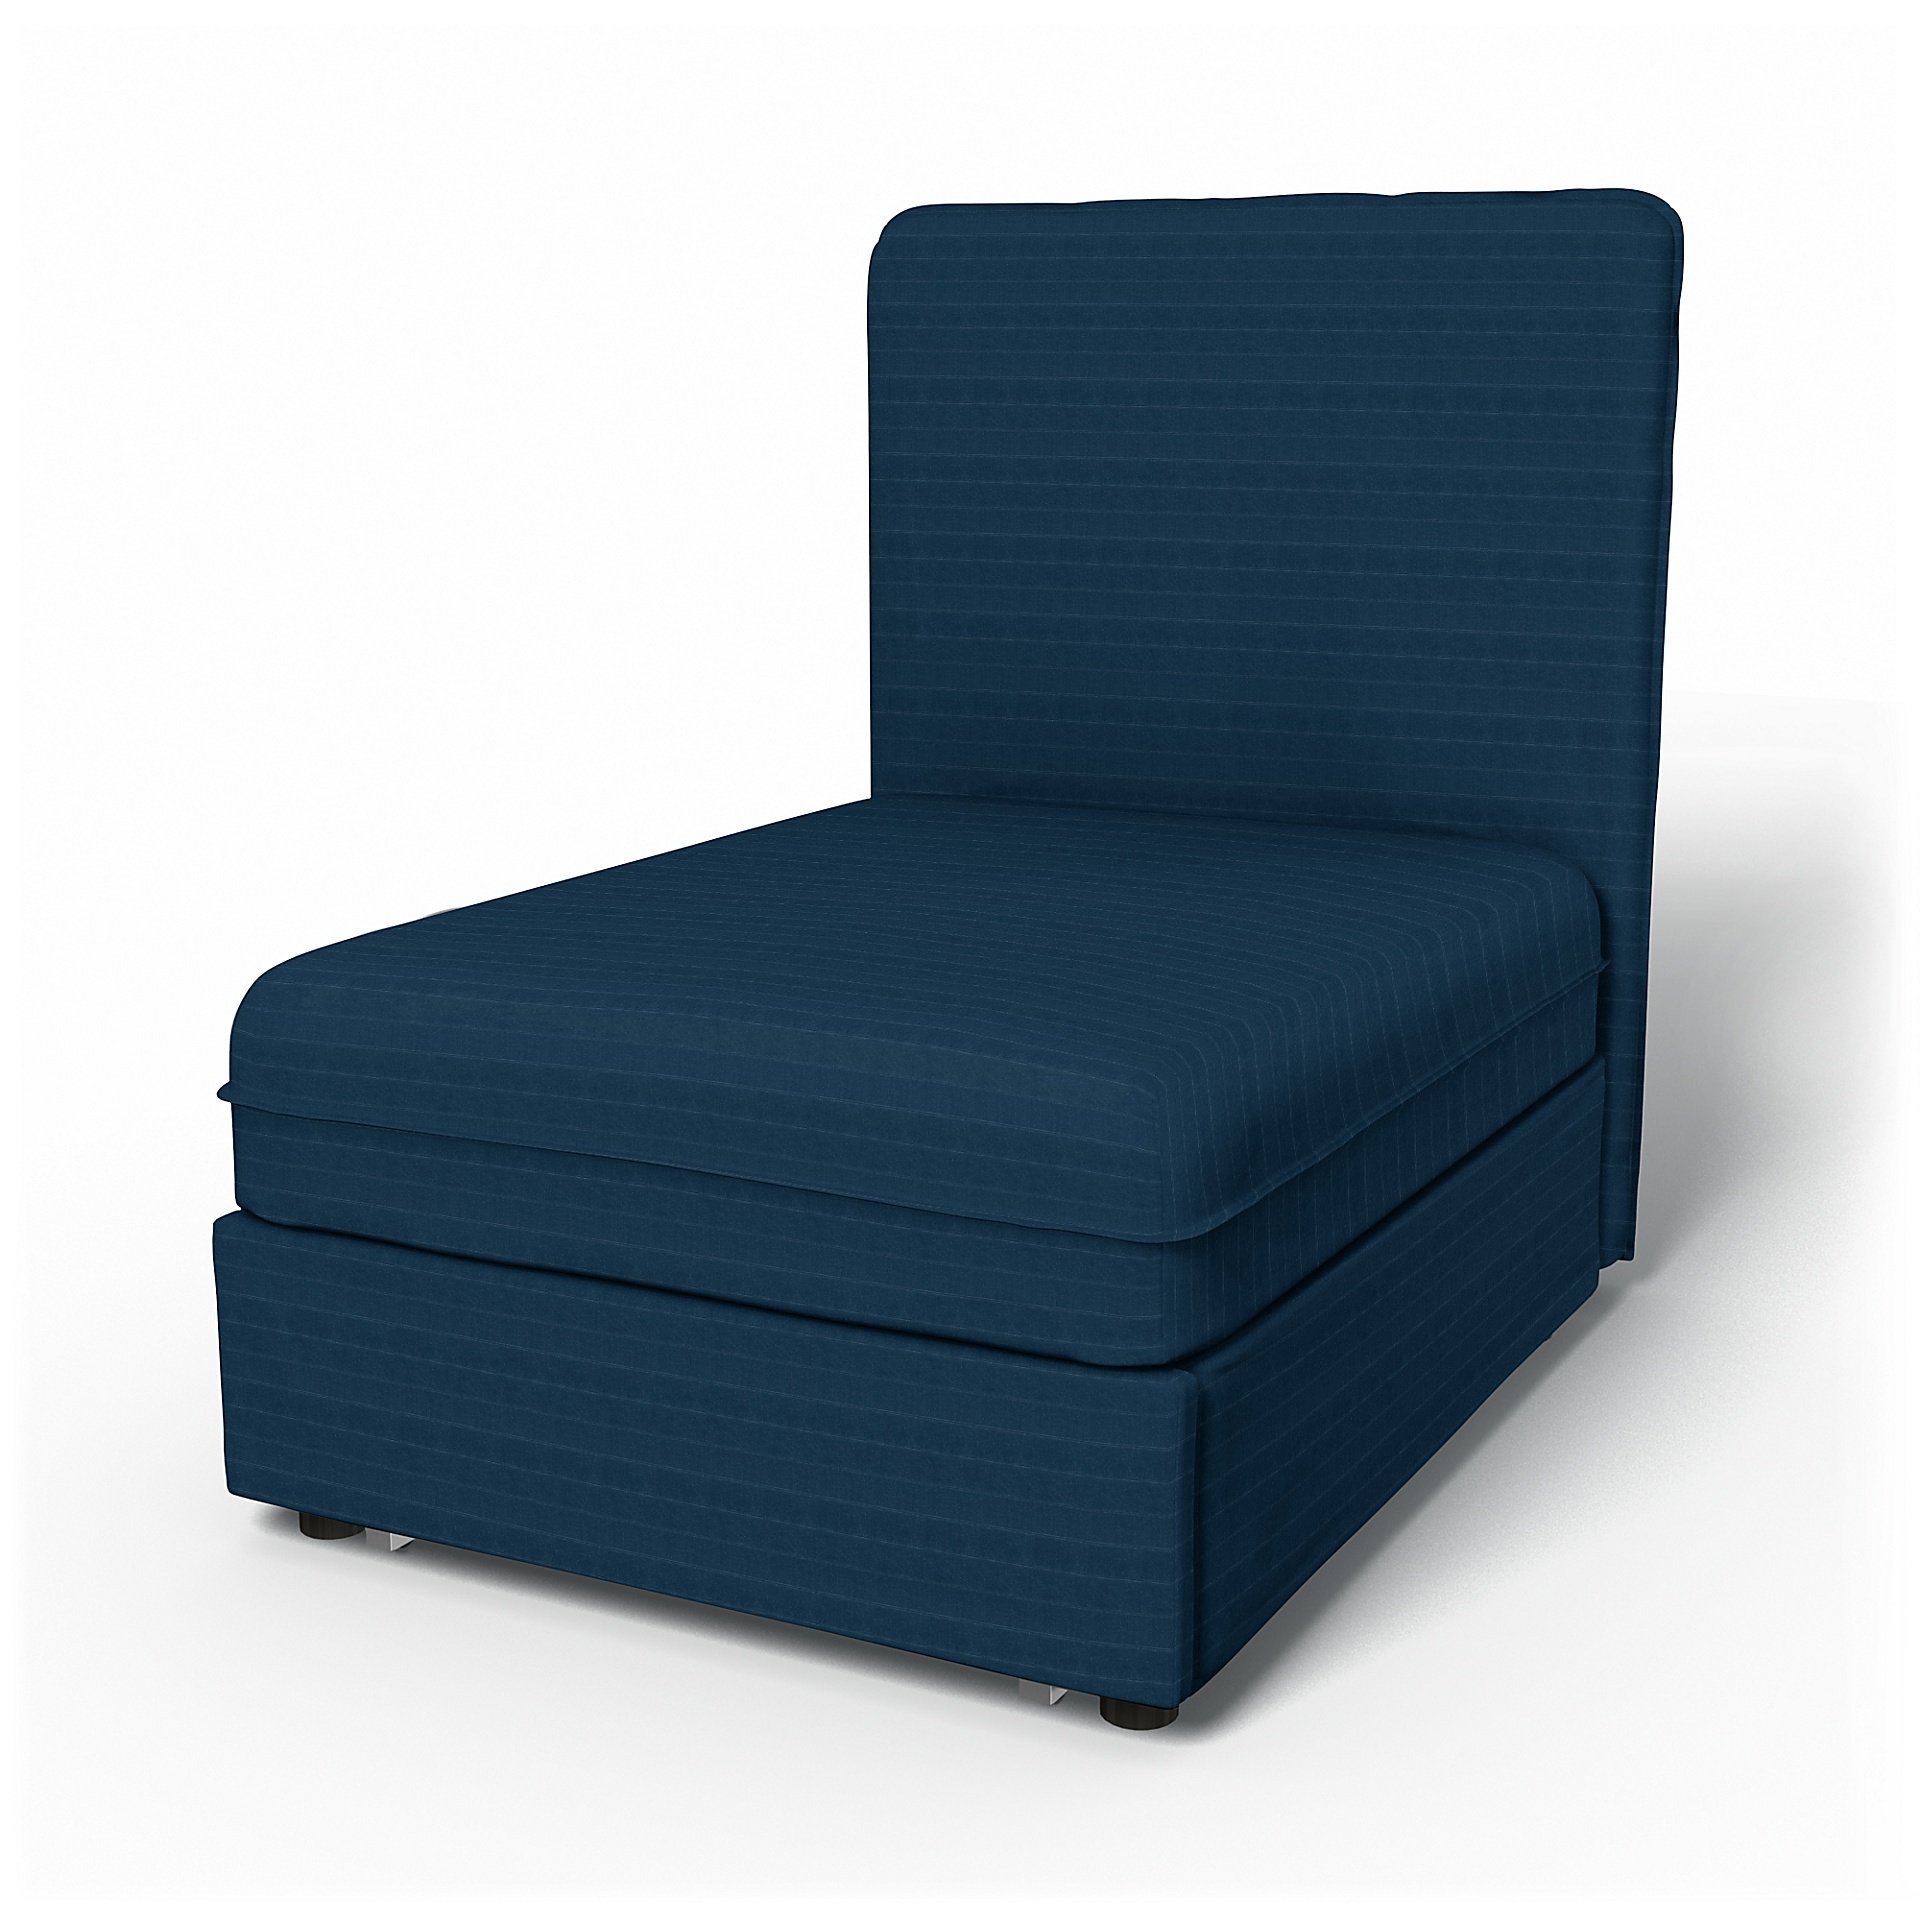 IKEA - Vallentuna Seat Module with High Back Sofa Bed Cover (80x100x46cm), Denim Blue, Velvet - Bemz